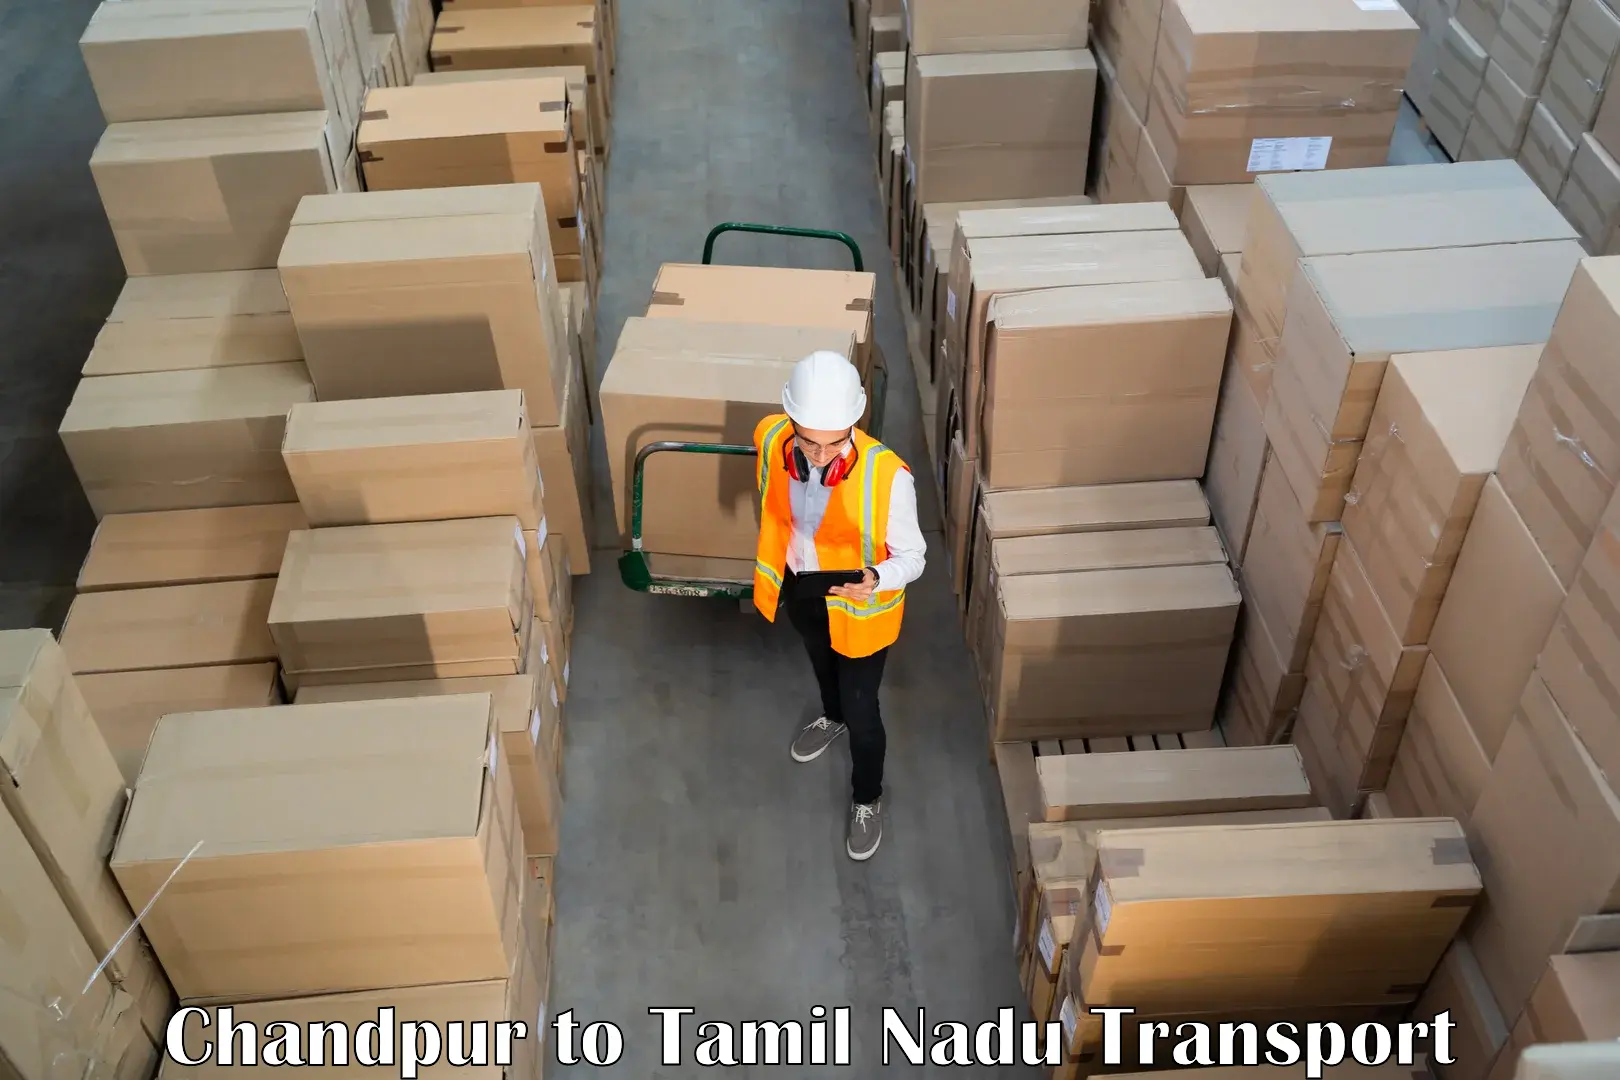 Shipping partner Chandpur to Kovilpatti